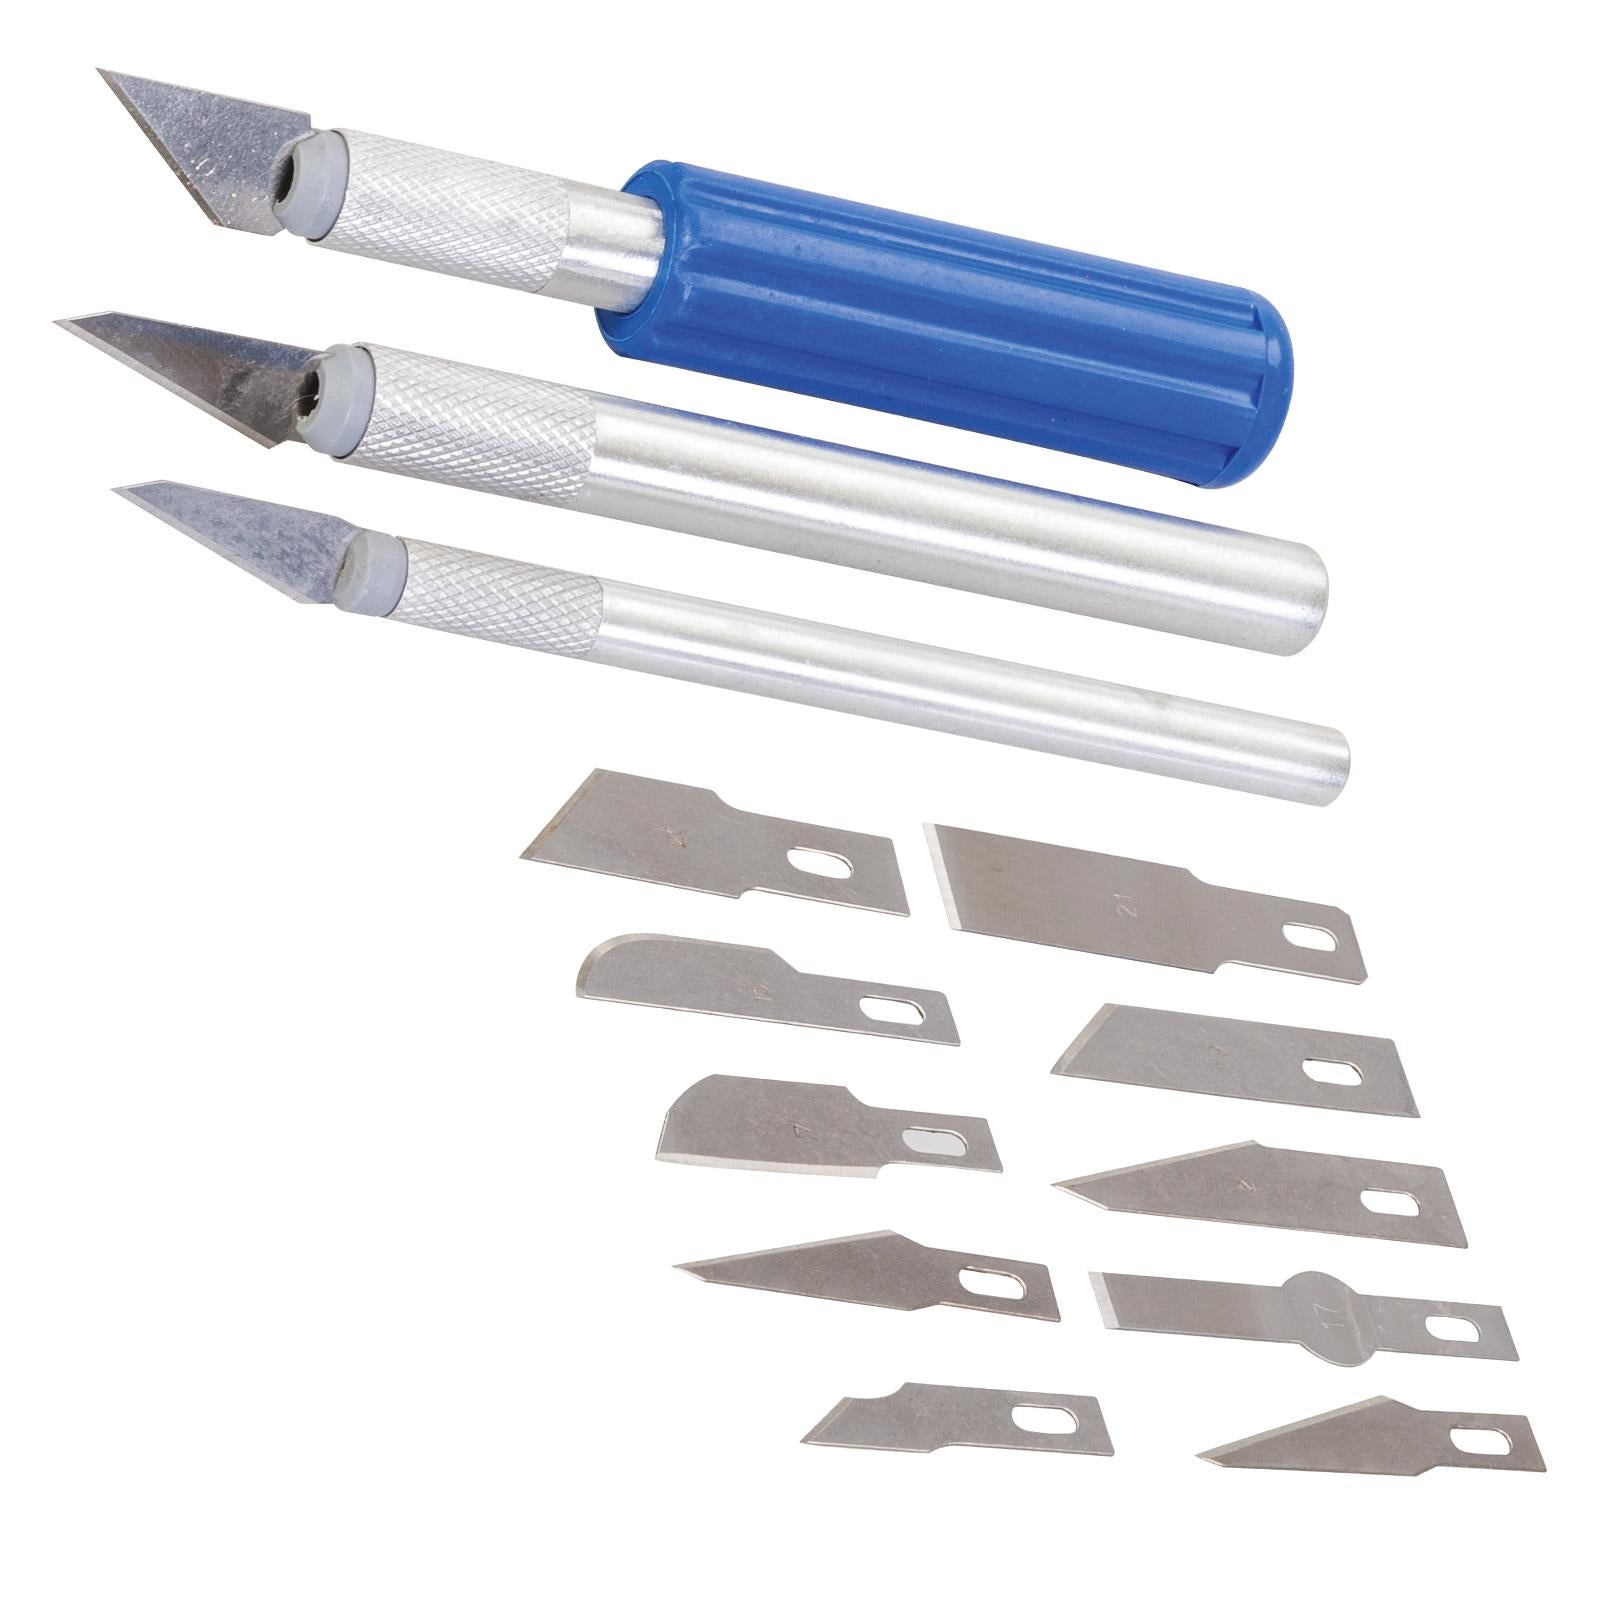 Silverline 16pc Hobby Knife Set